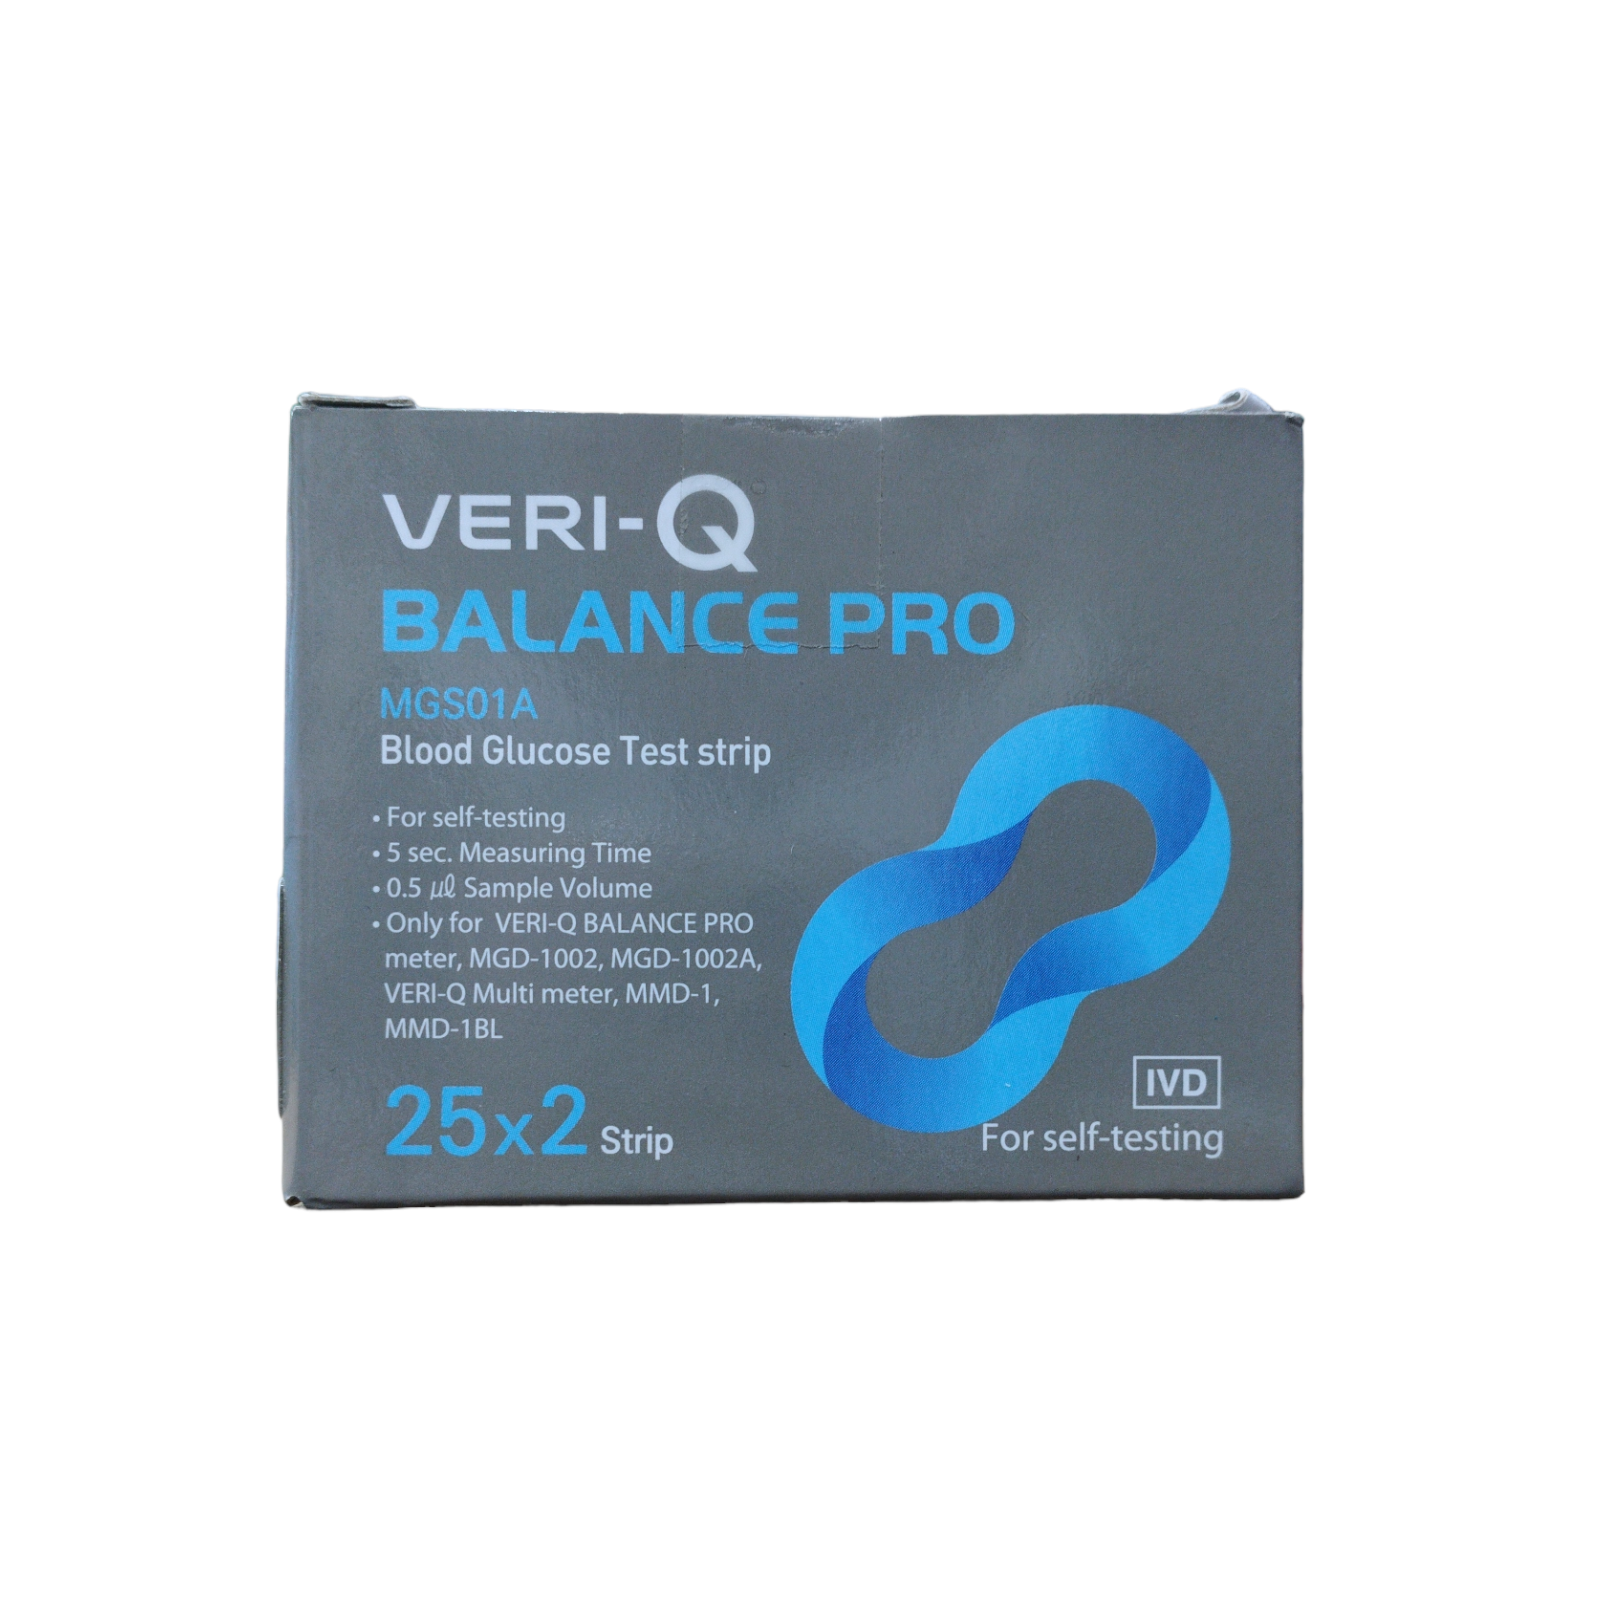 Veri-Q Balance Pro Blood Glucose Test Strips (MGS01A)